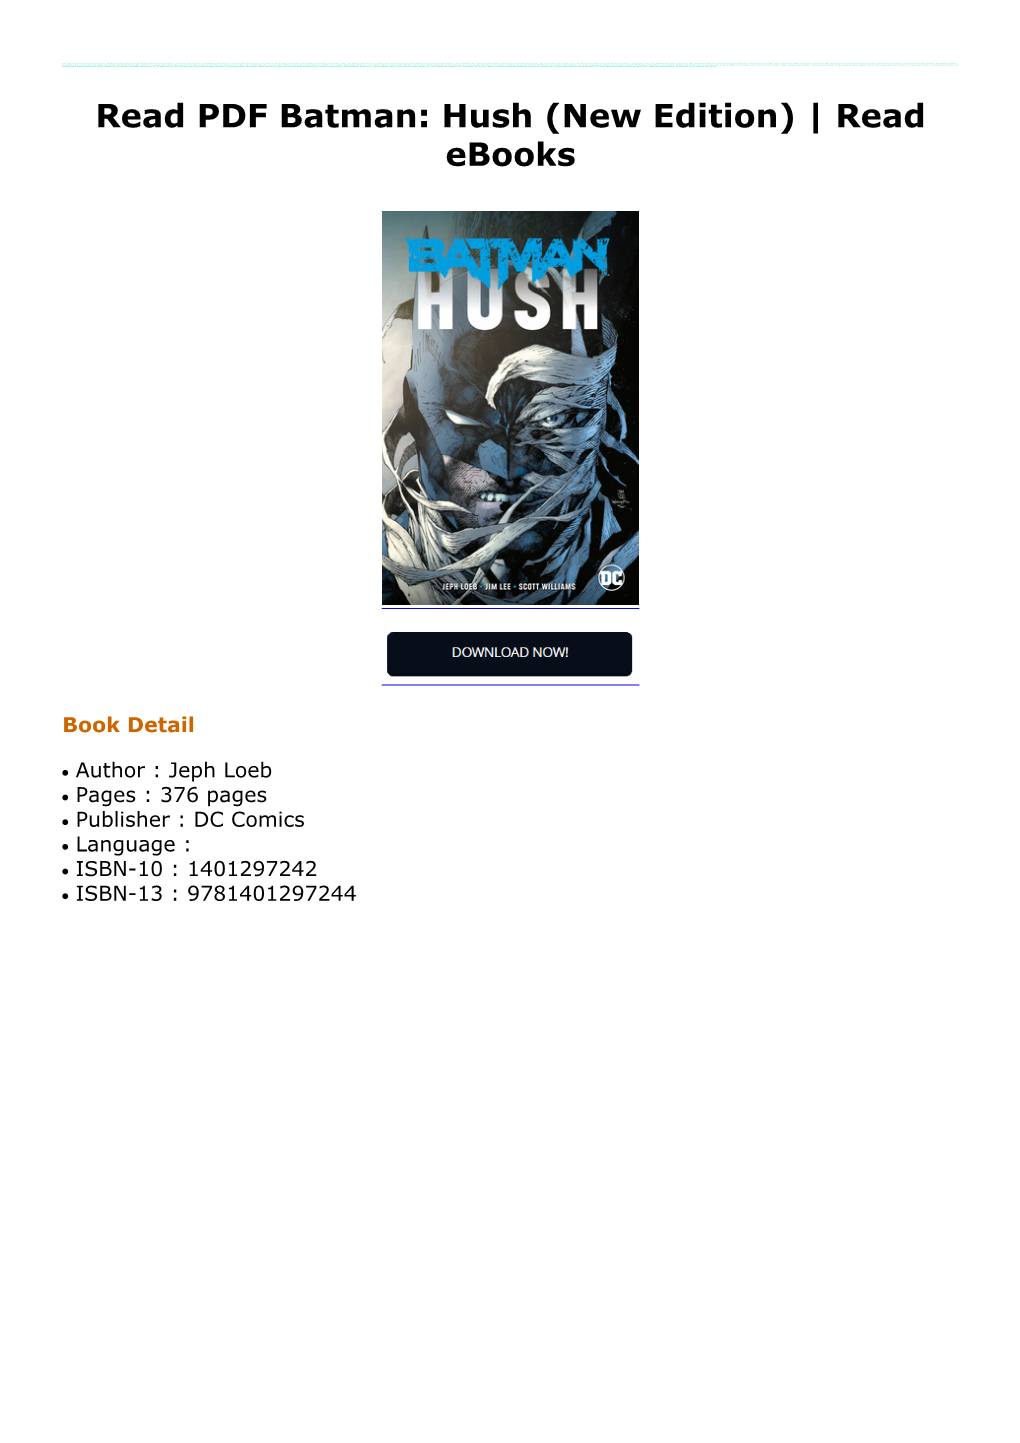 Read PDF Batman: Hush (New Edition)